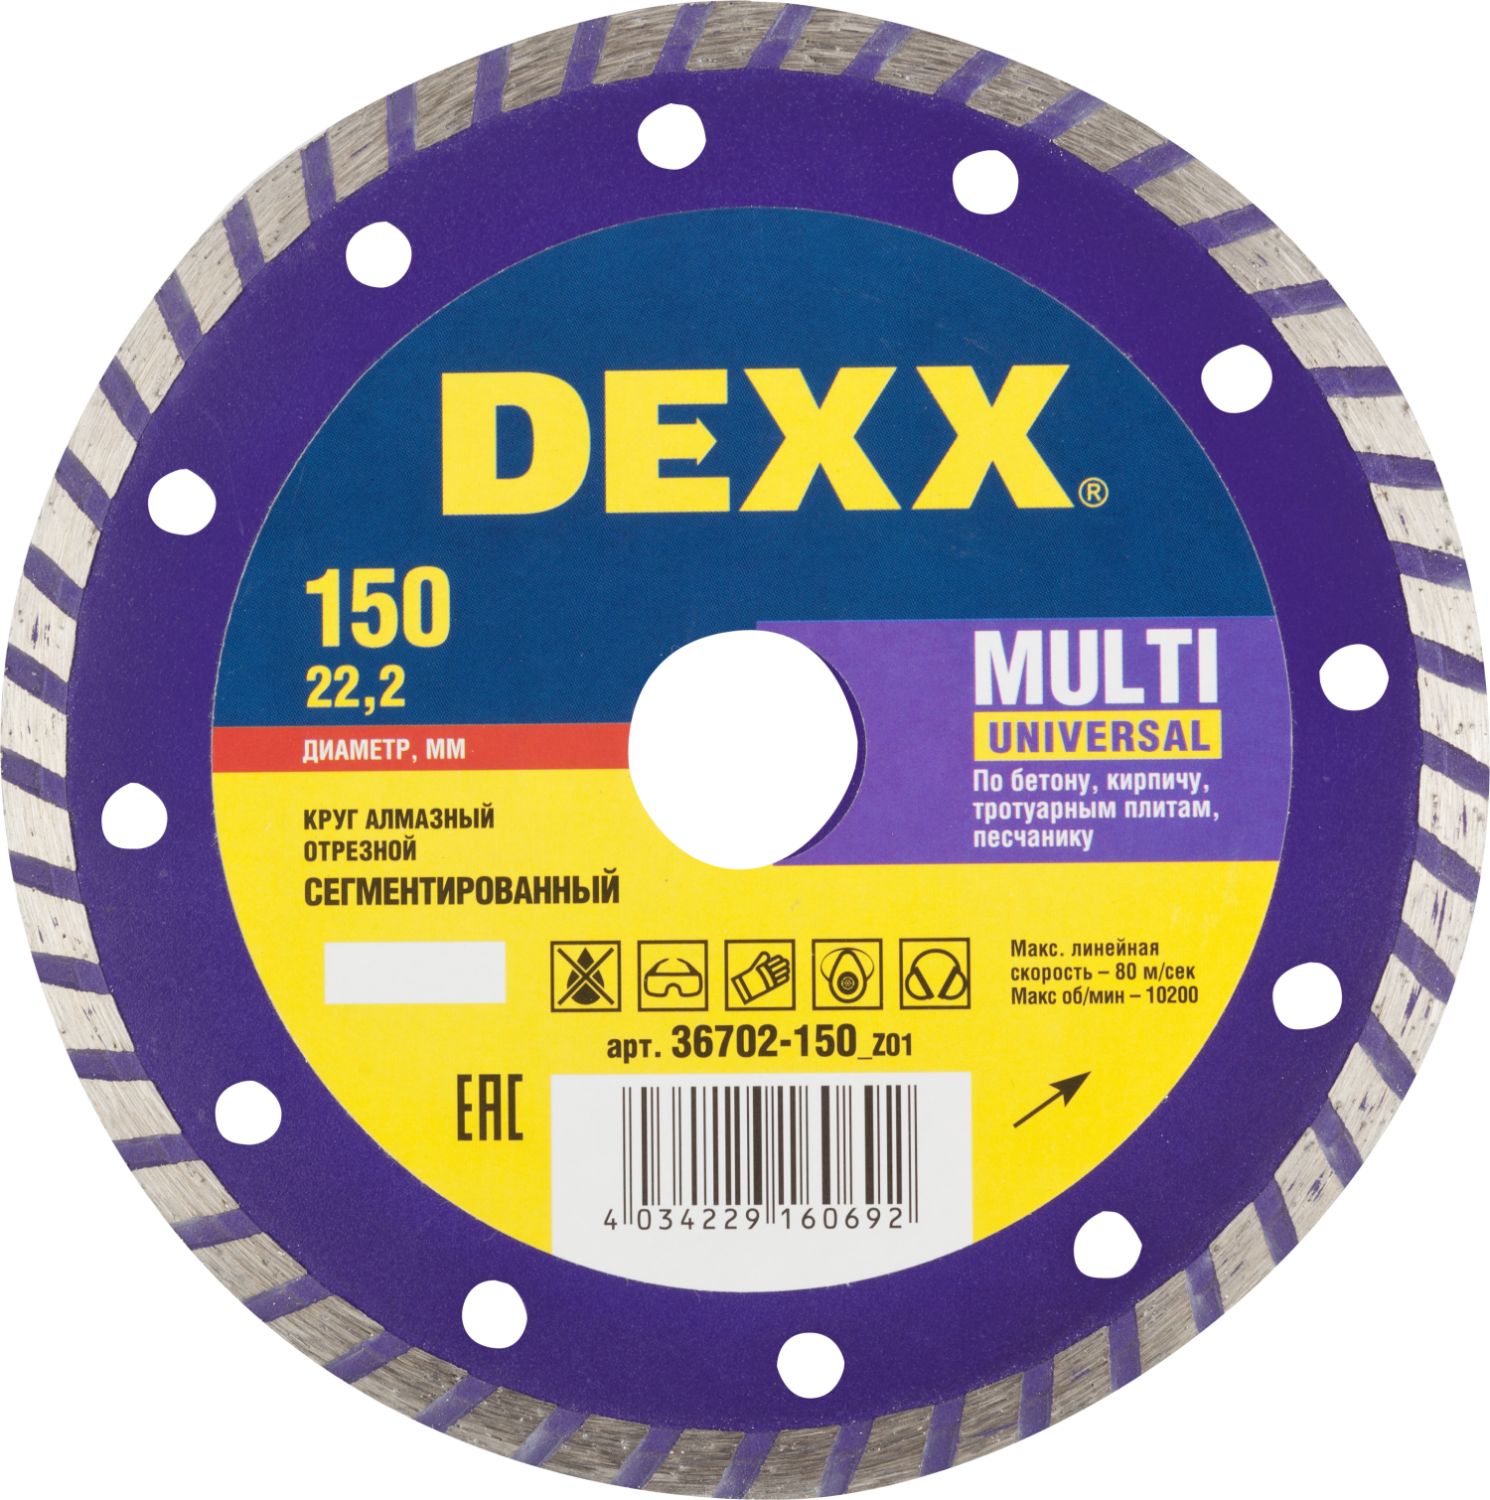 DEXX Multi Universal, 150 , (22.2 , 7  2.1 ),    (36702-150)